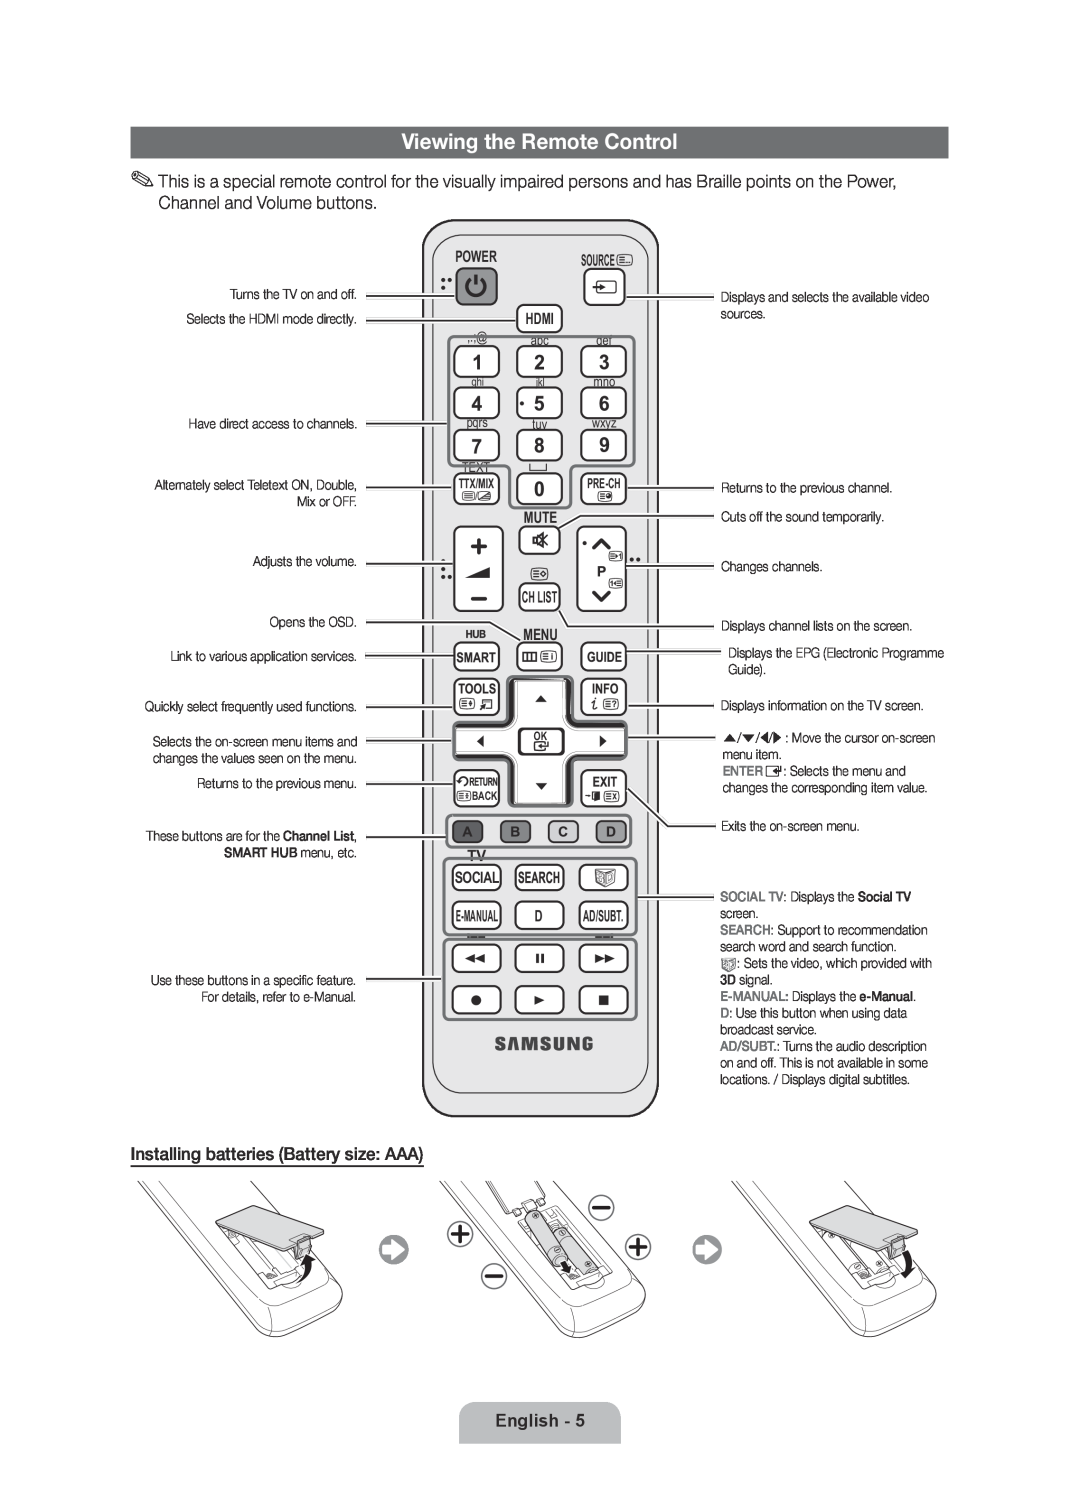 Samsung UE46D6000TPXZT Viewing the Remote Control, English, Source, Menu, Tv Social E-Manual D, AD/SUBT. screen, Ch List 